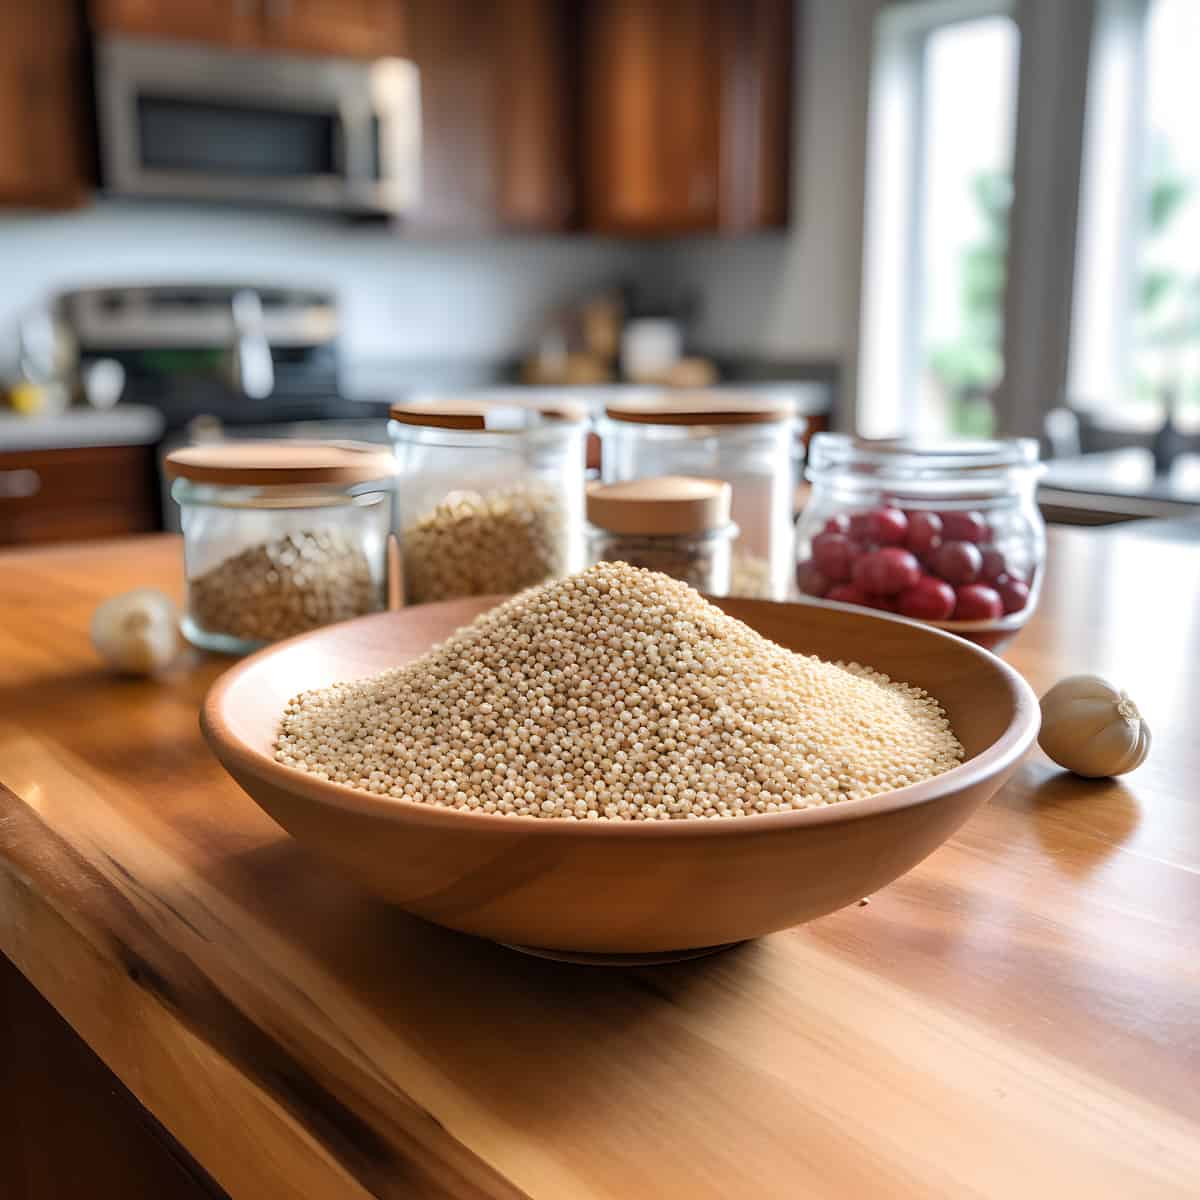 Quinoa on a kitchen counter